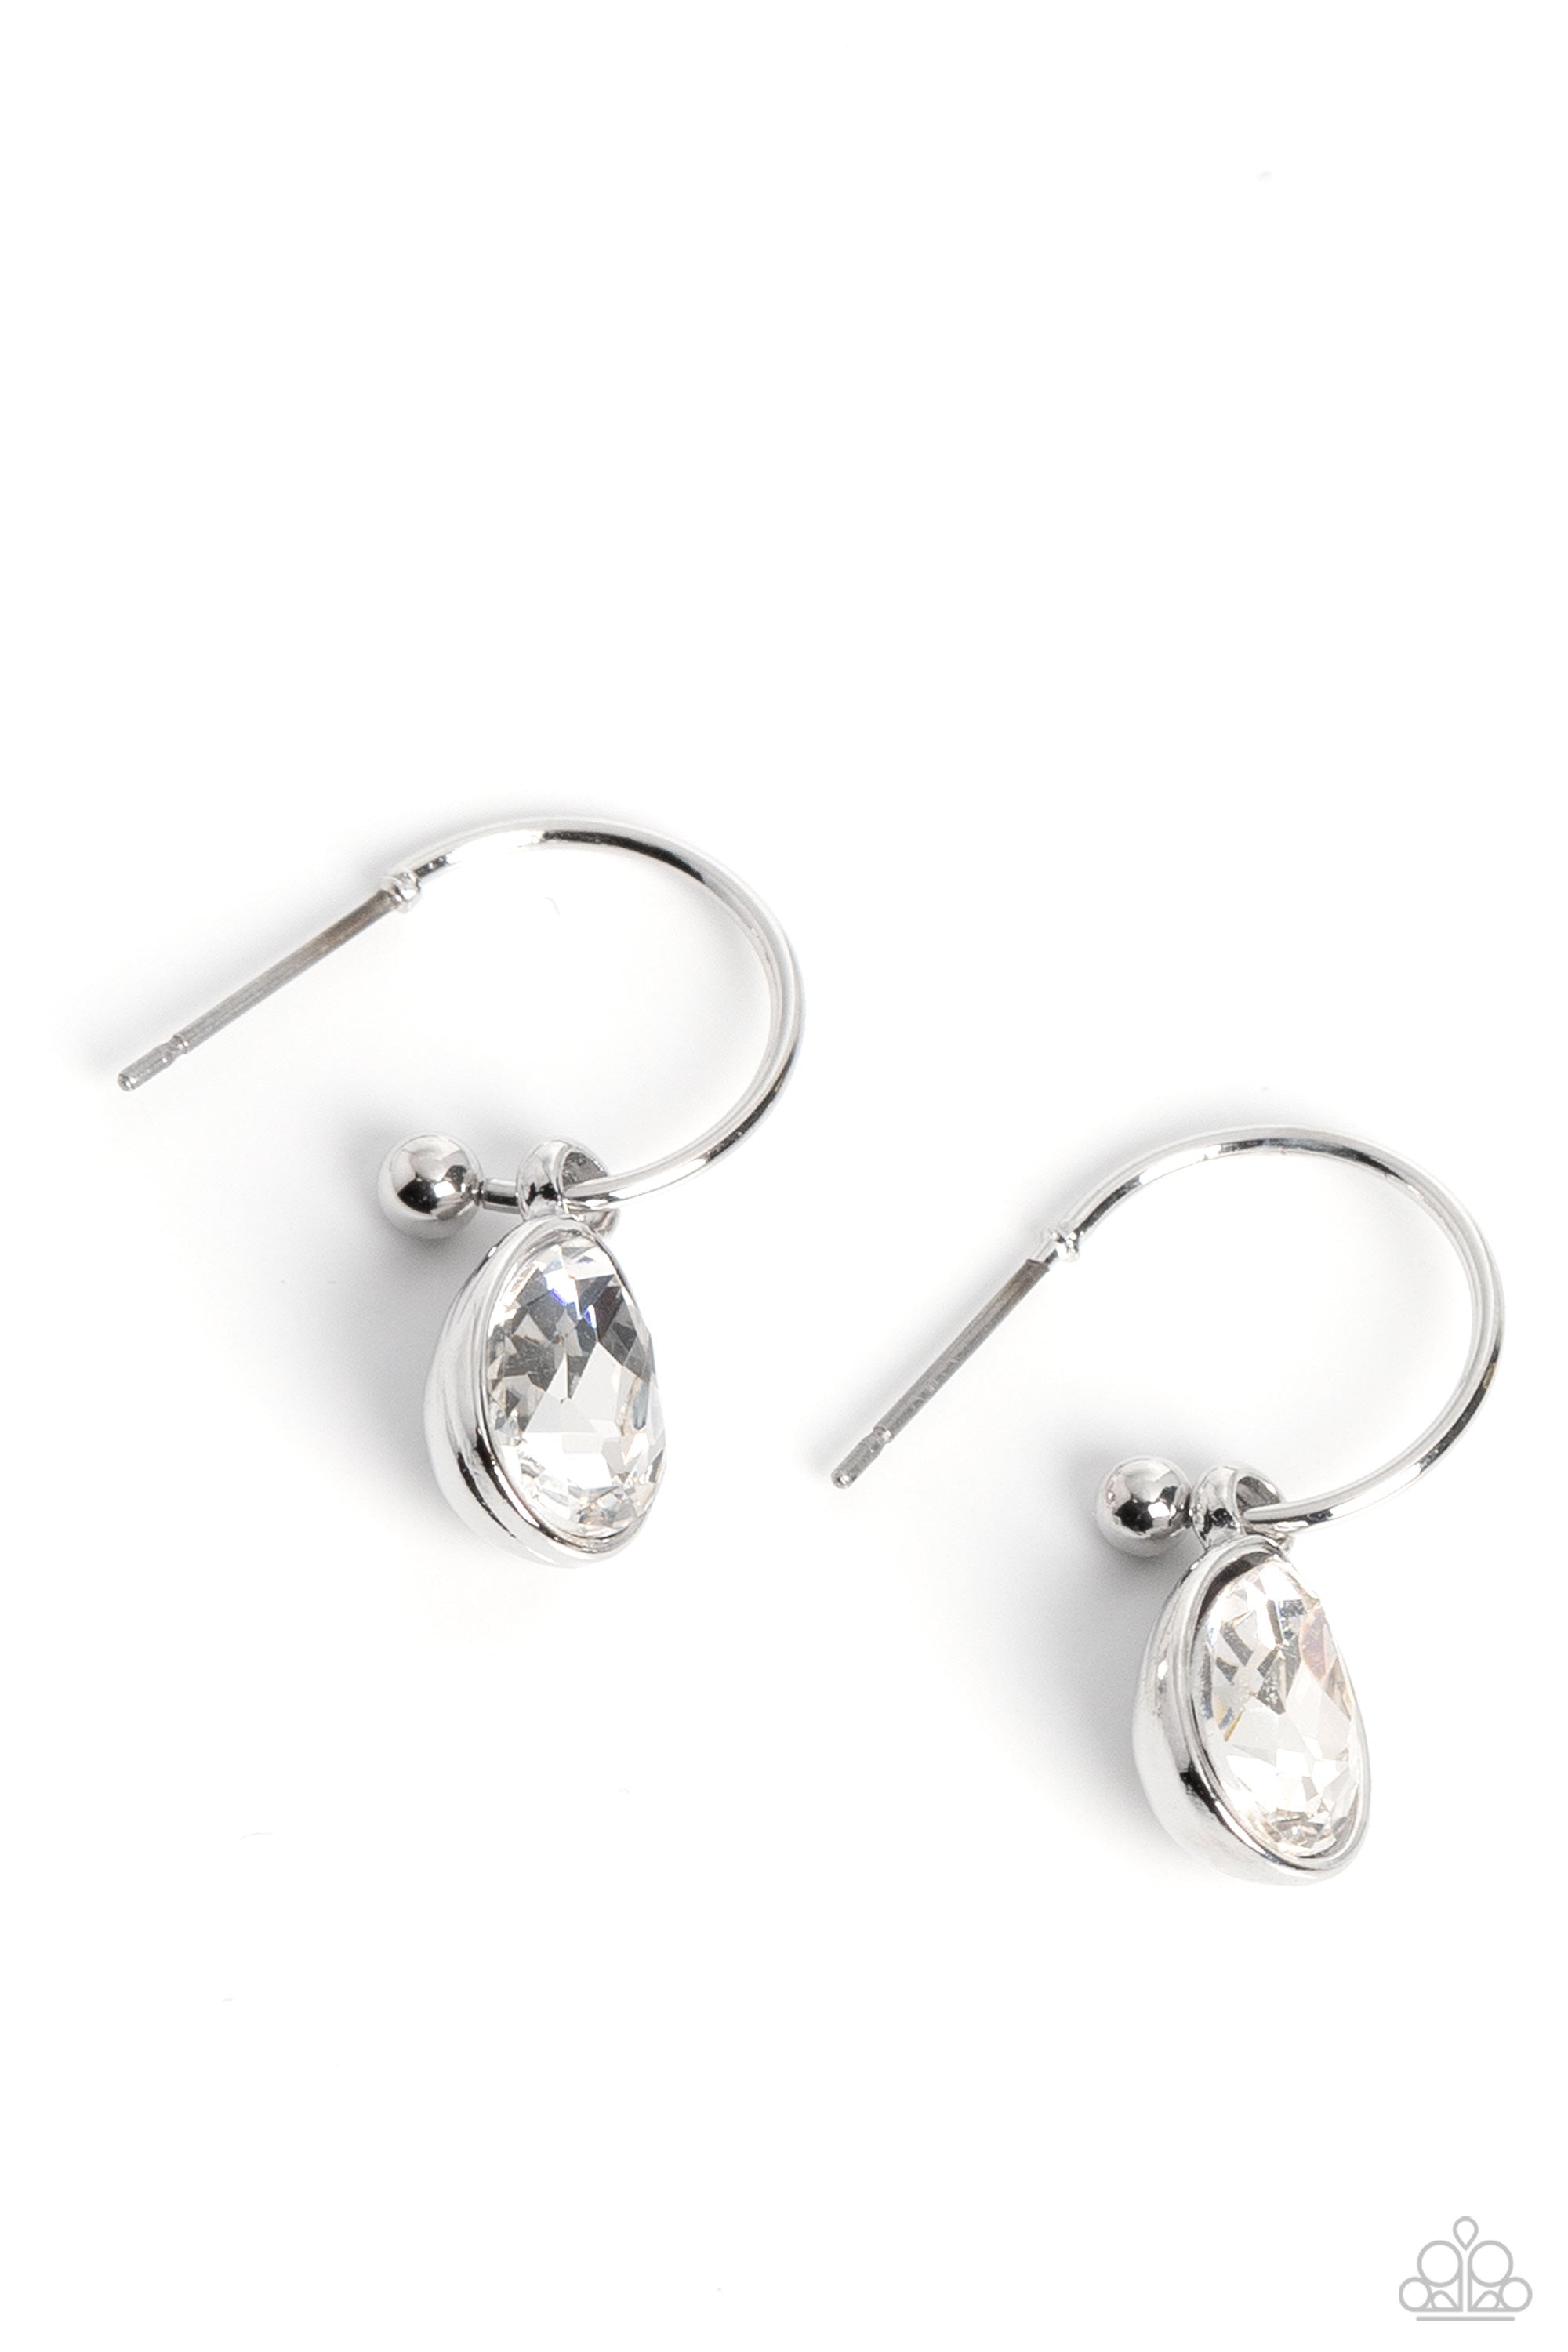 Teardrop Tassel White Rhinestone Hoop Earrings- lightbox - CarasShop.com - $5 Jewelry by Cara Jewels